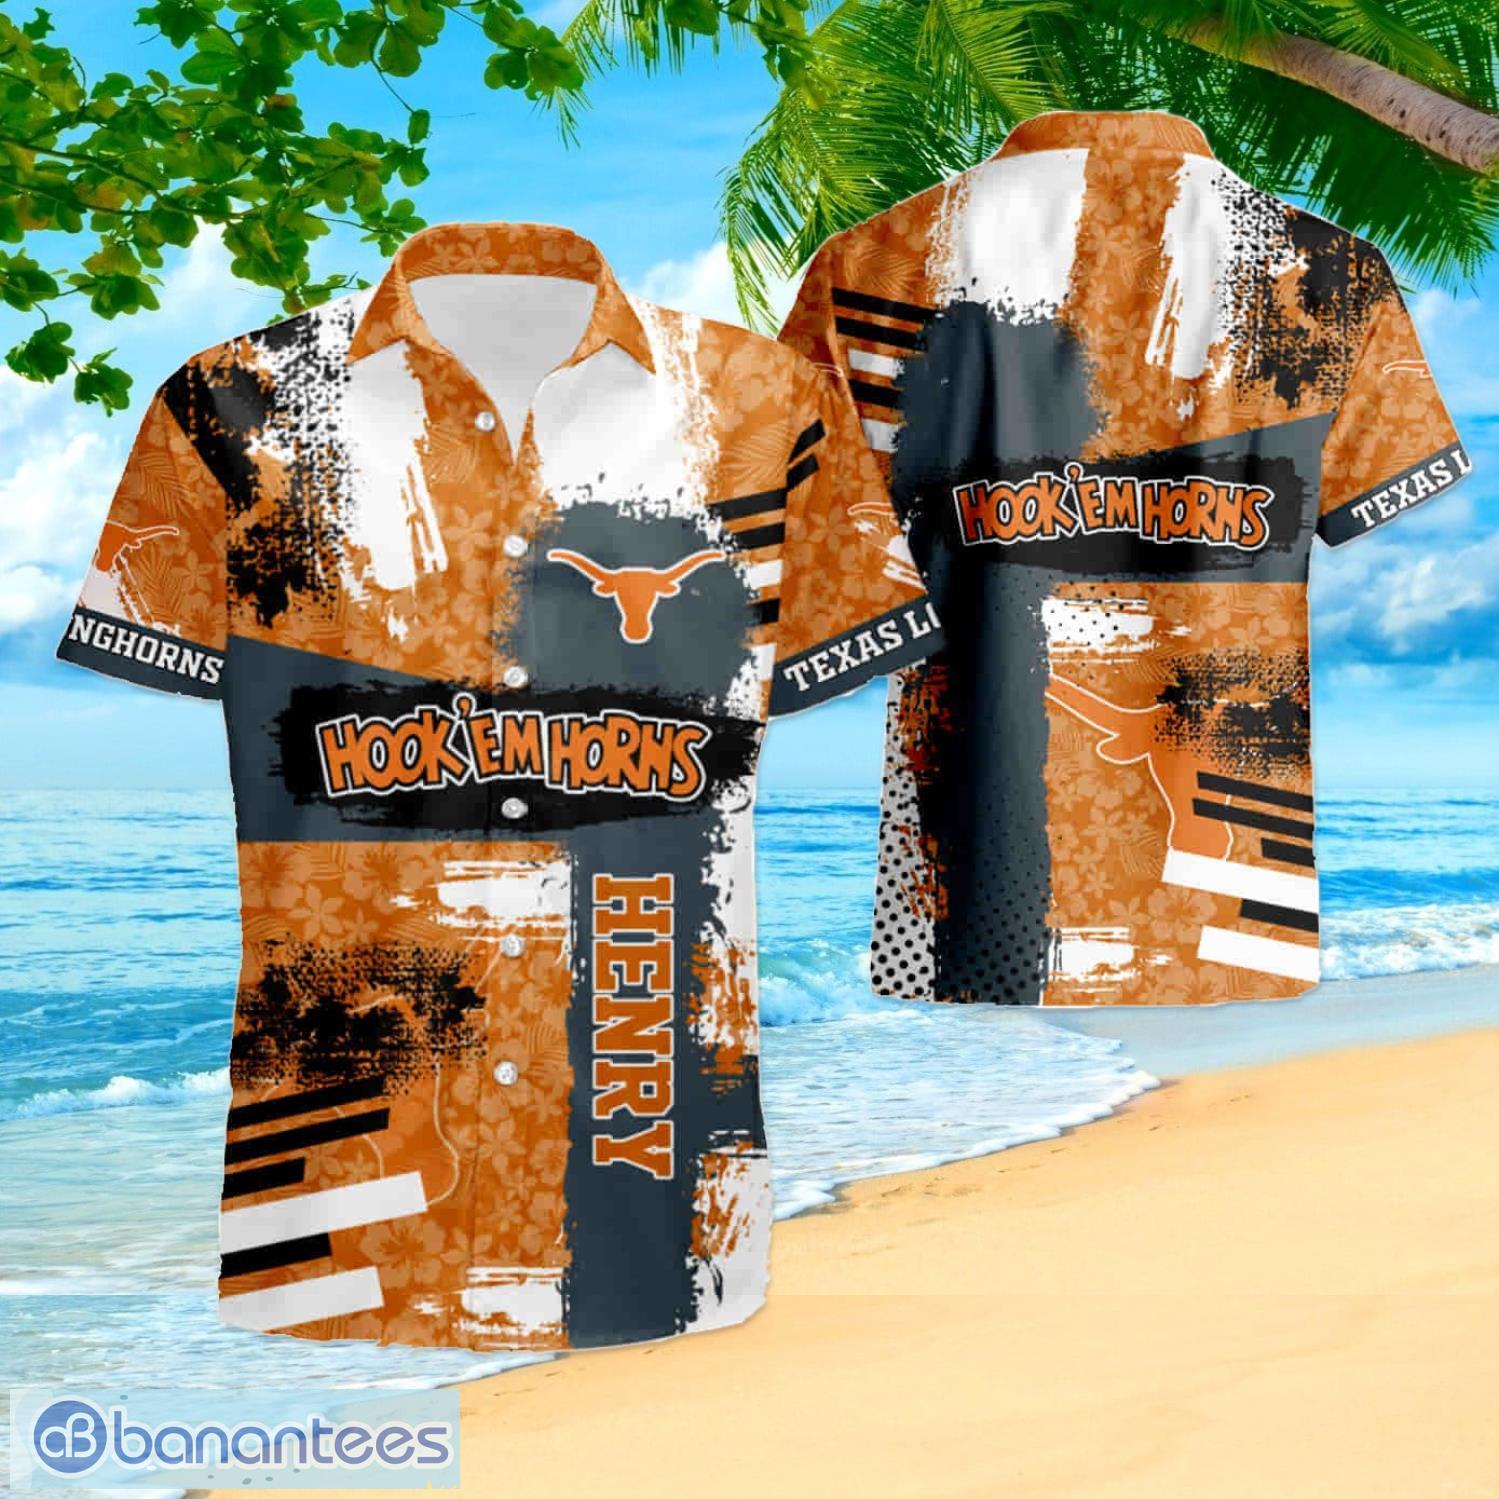 New York Mets Retro Summer Pattern Hawaiian Shirt - Banantees